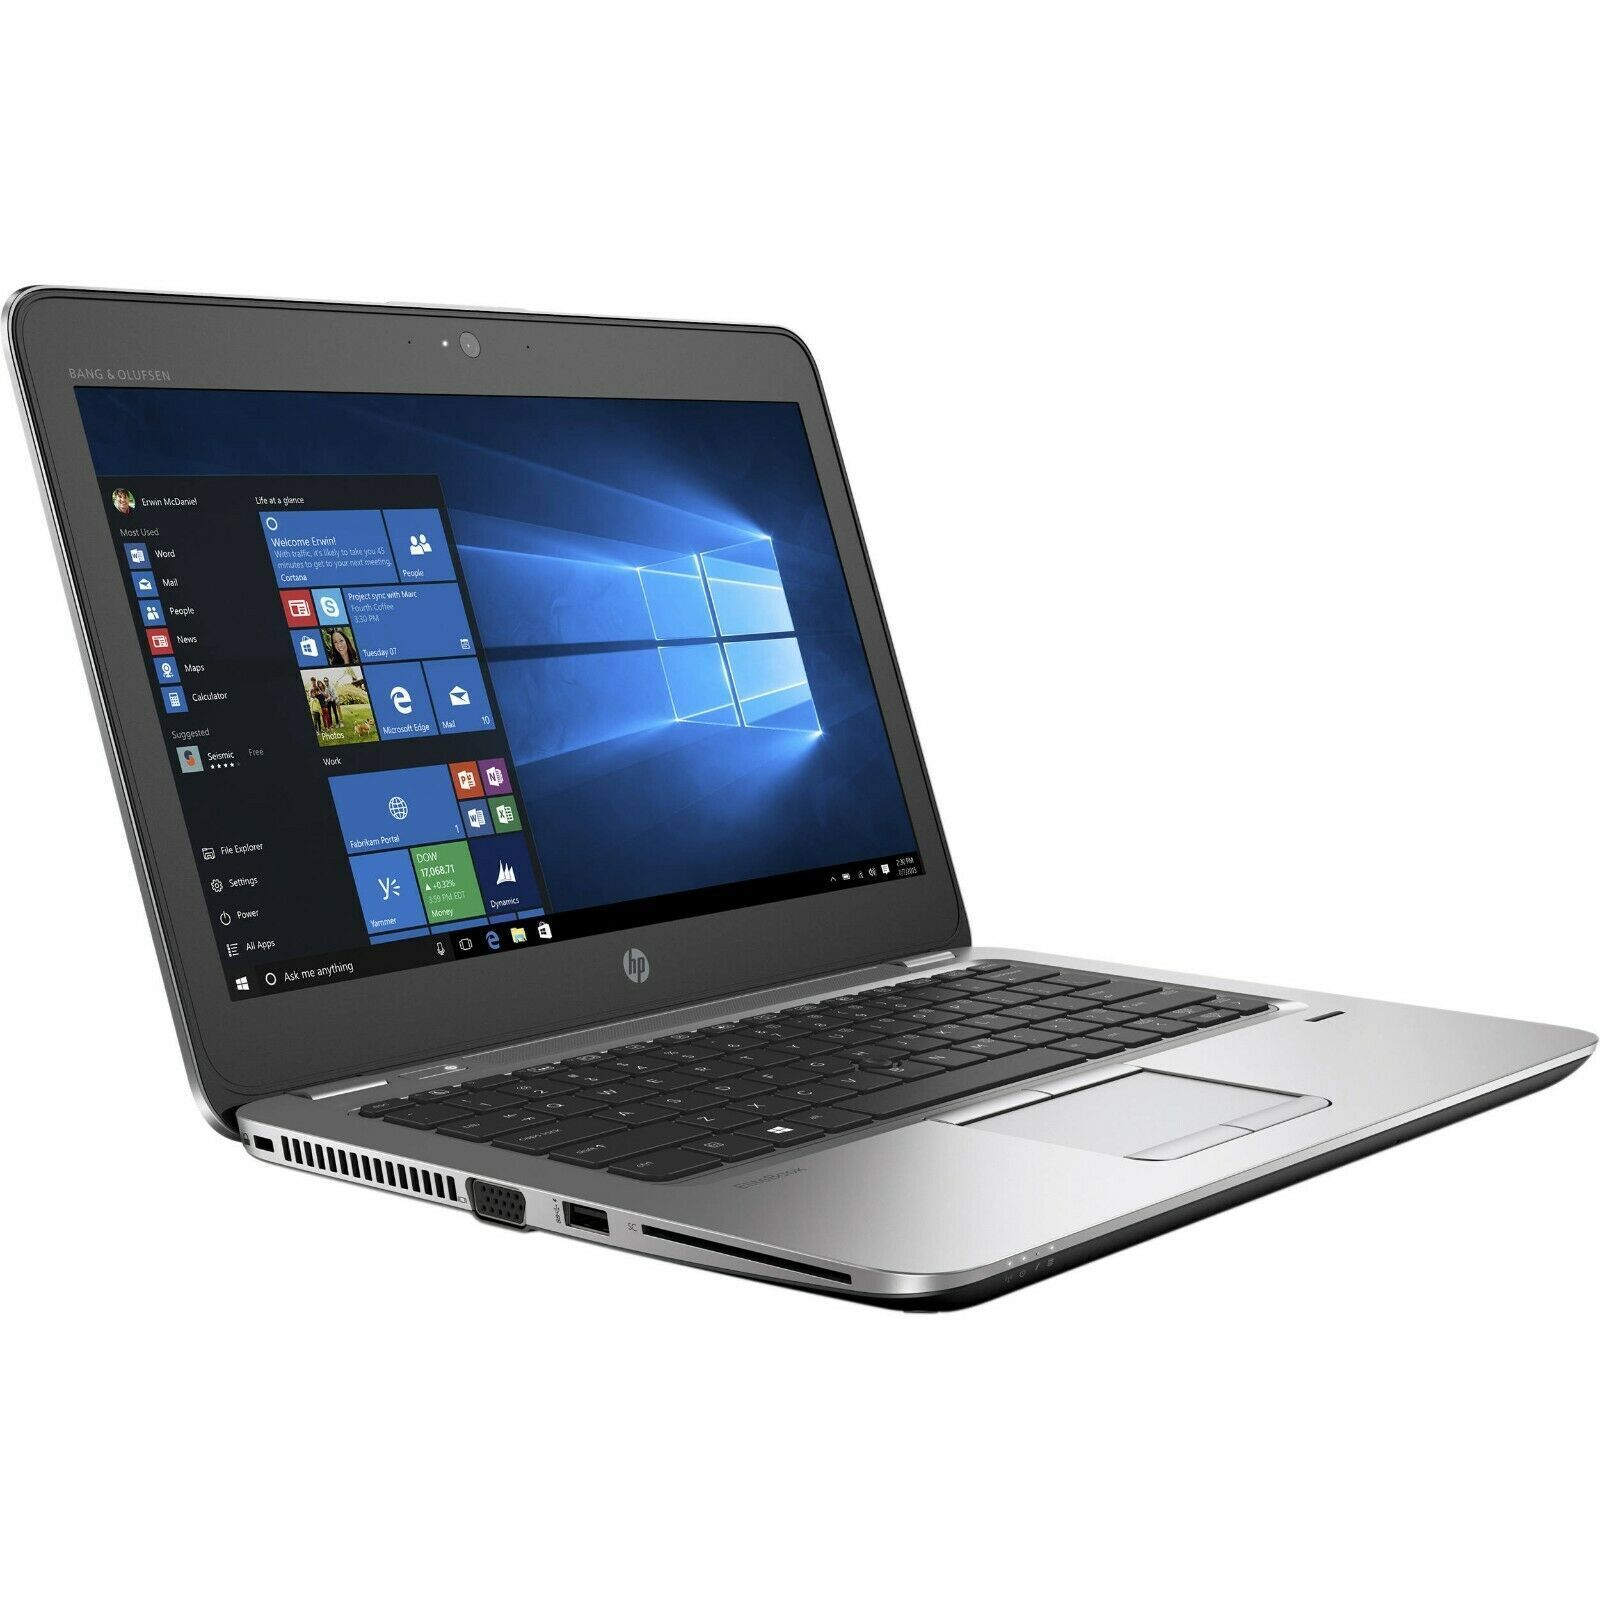 HP EliteBook 820 G3 Intel i7 6600U 2.60Ghz 16GB RAM 1TB HDD 12.5" Win 10 - B Grade Image 2